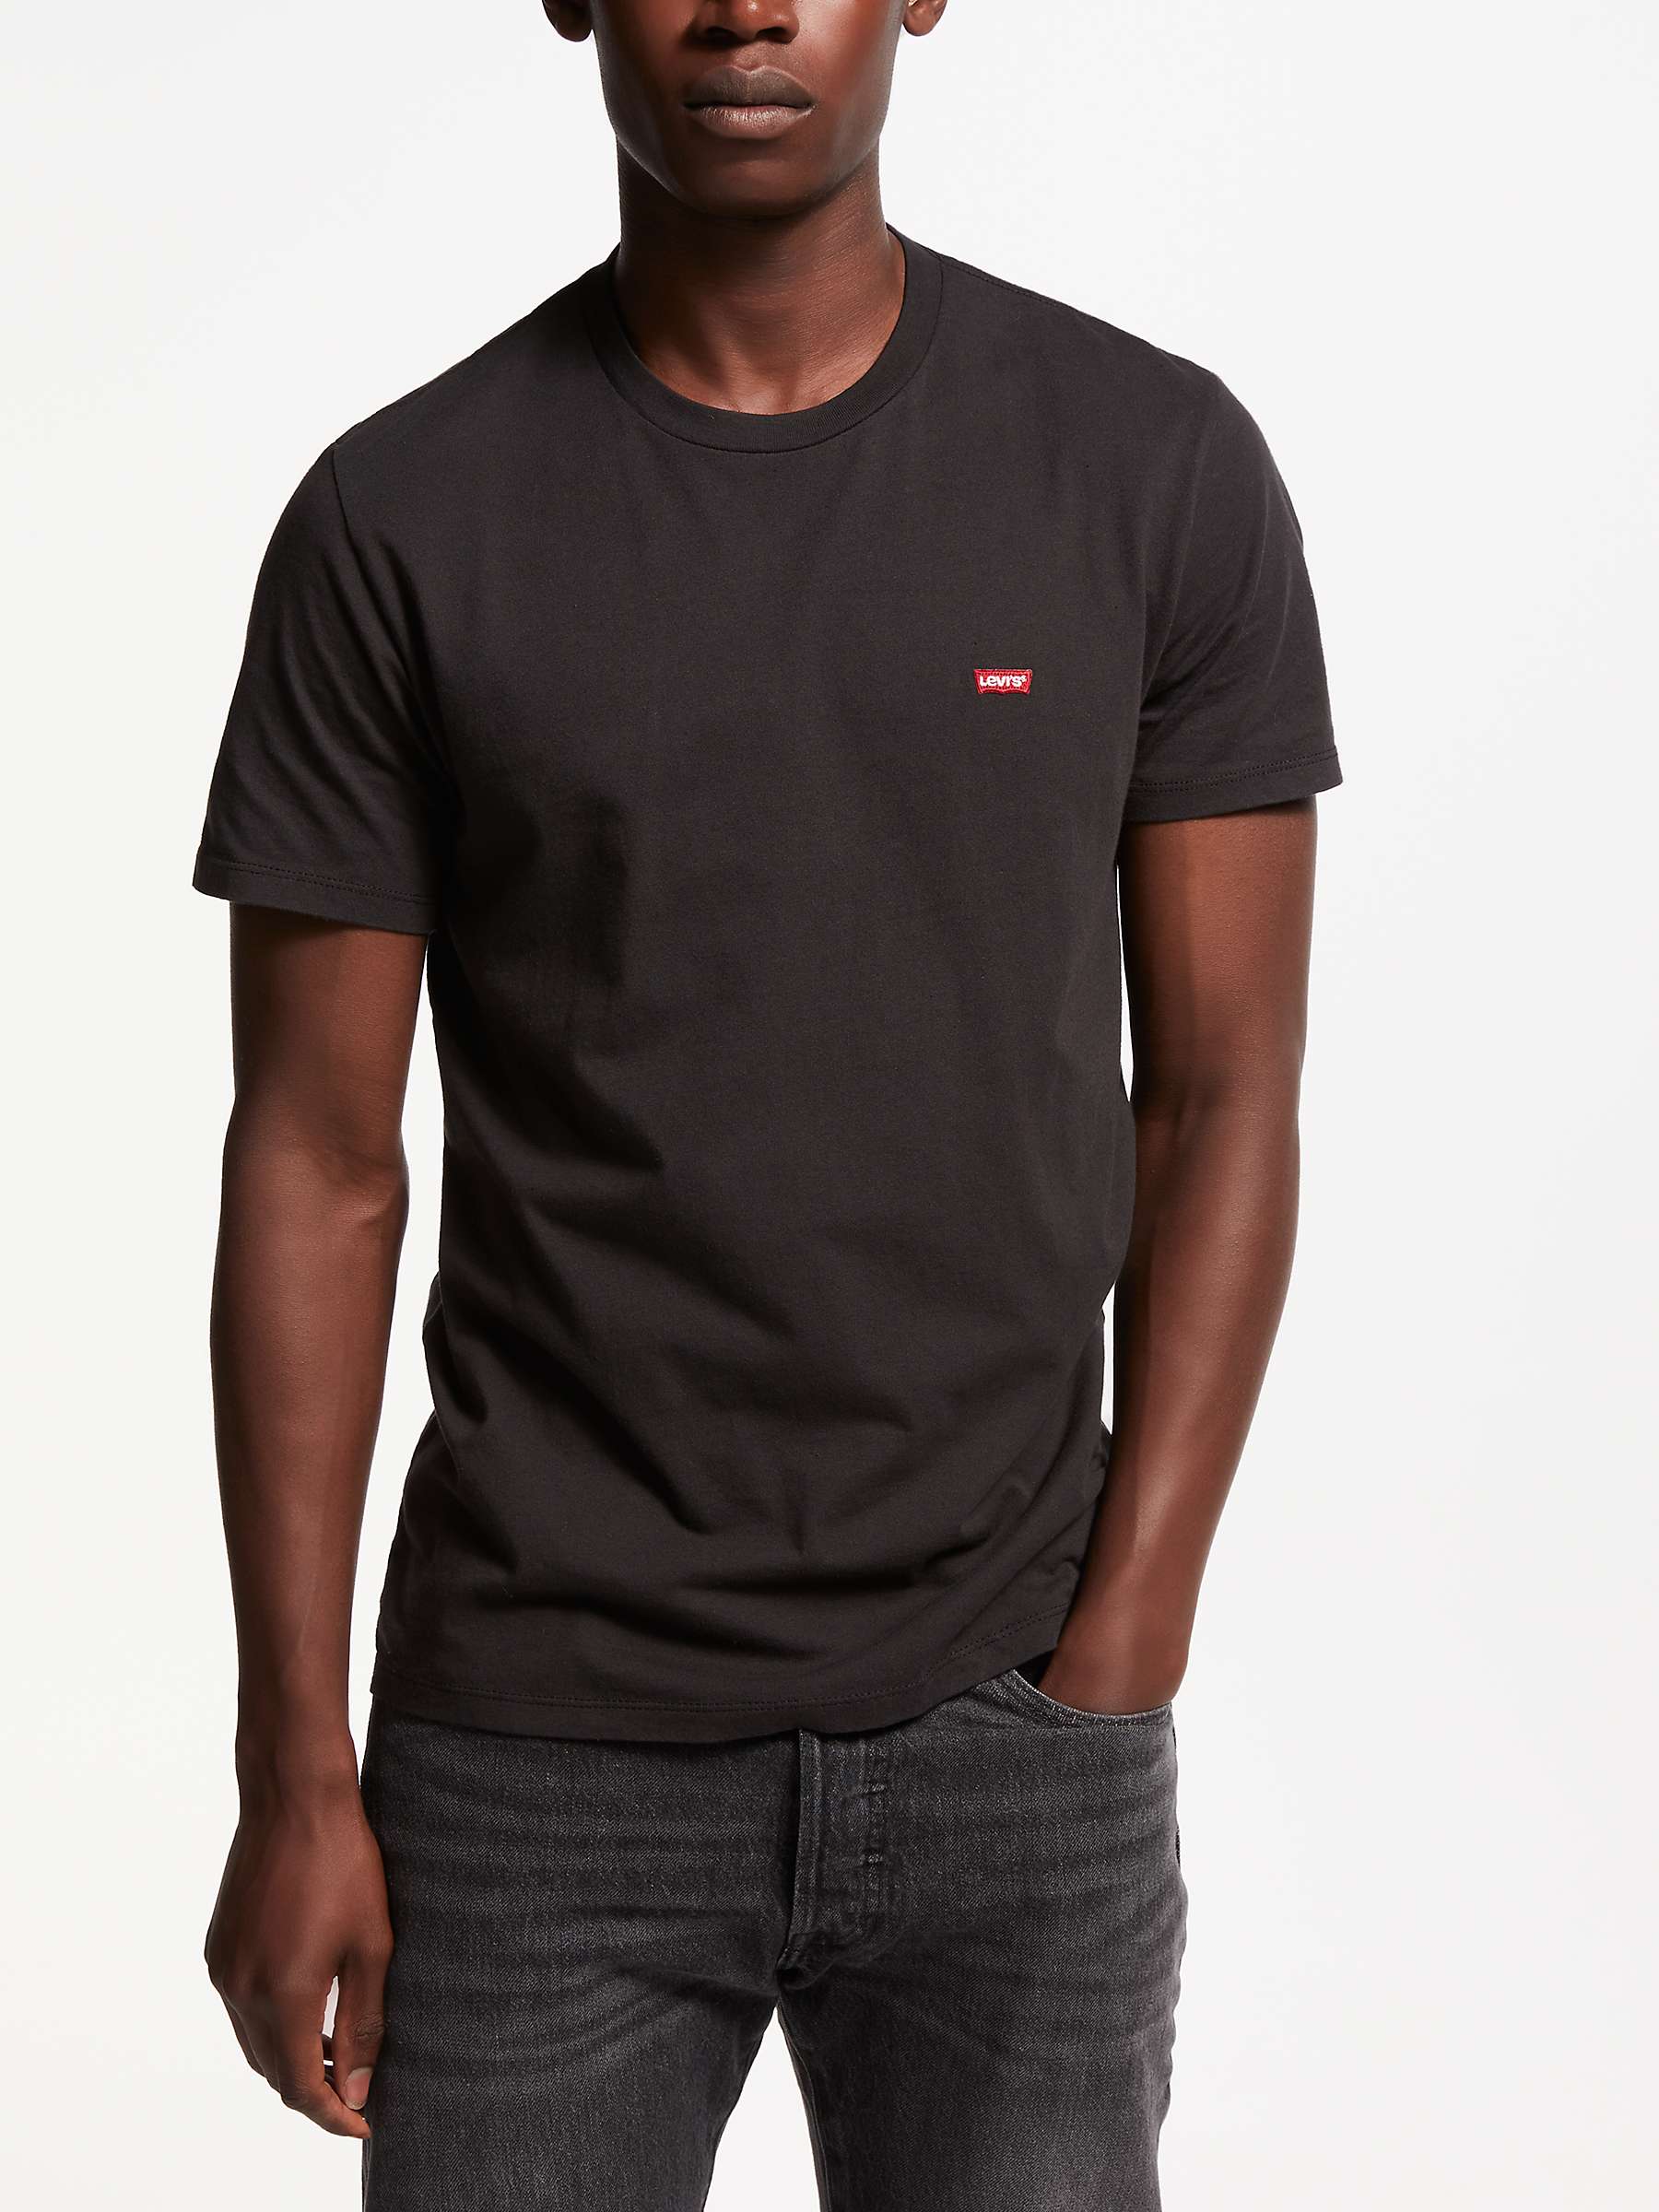 Levi'S Original T-Shirt, Black At John Lewis & Partners